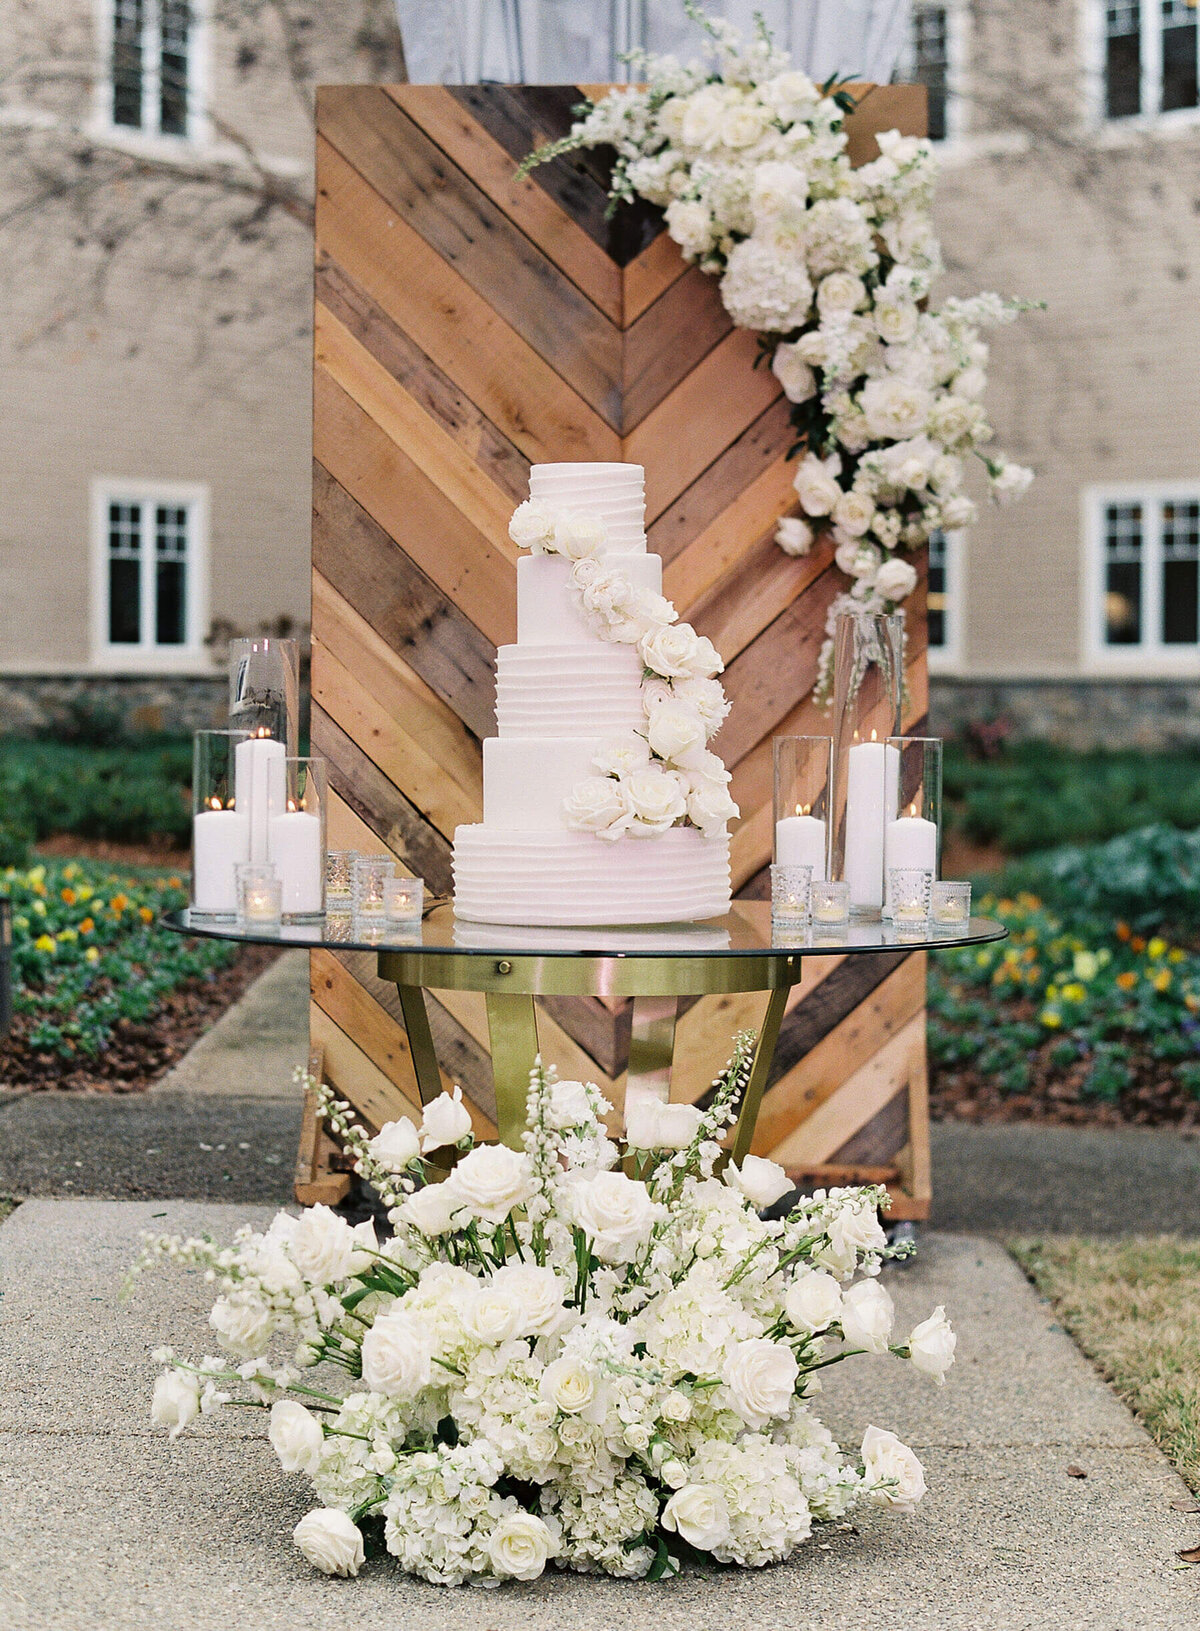 white wedding cake with white roses and hydrangea